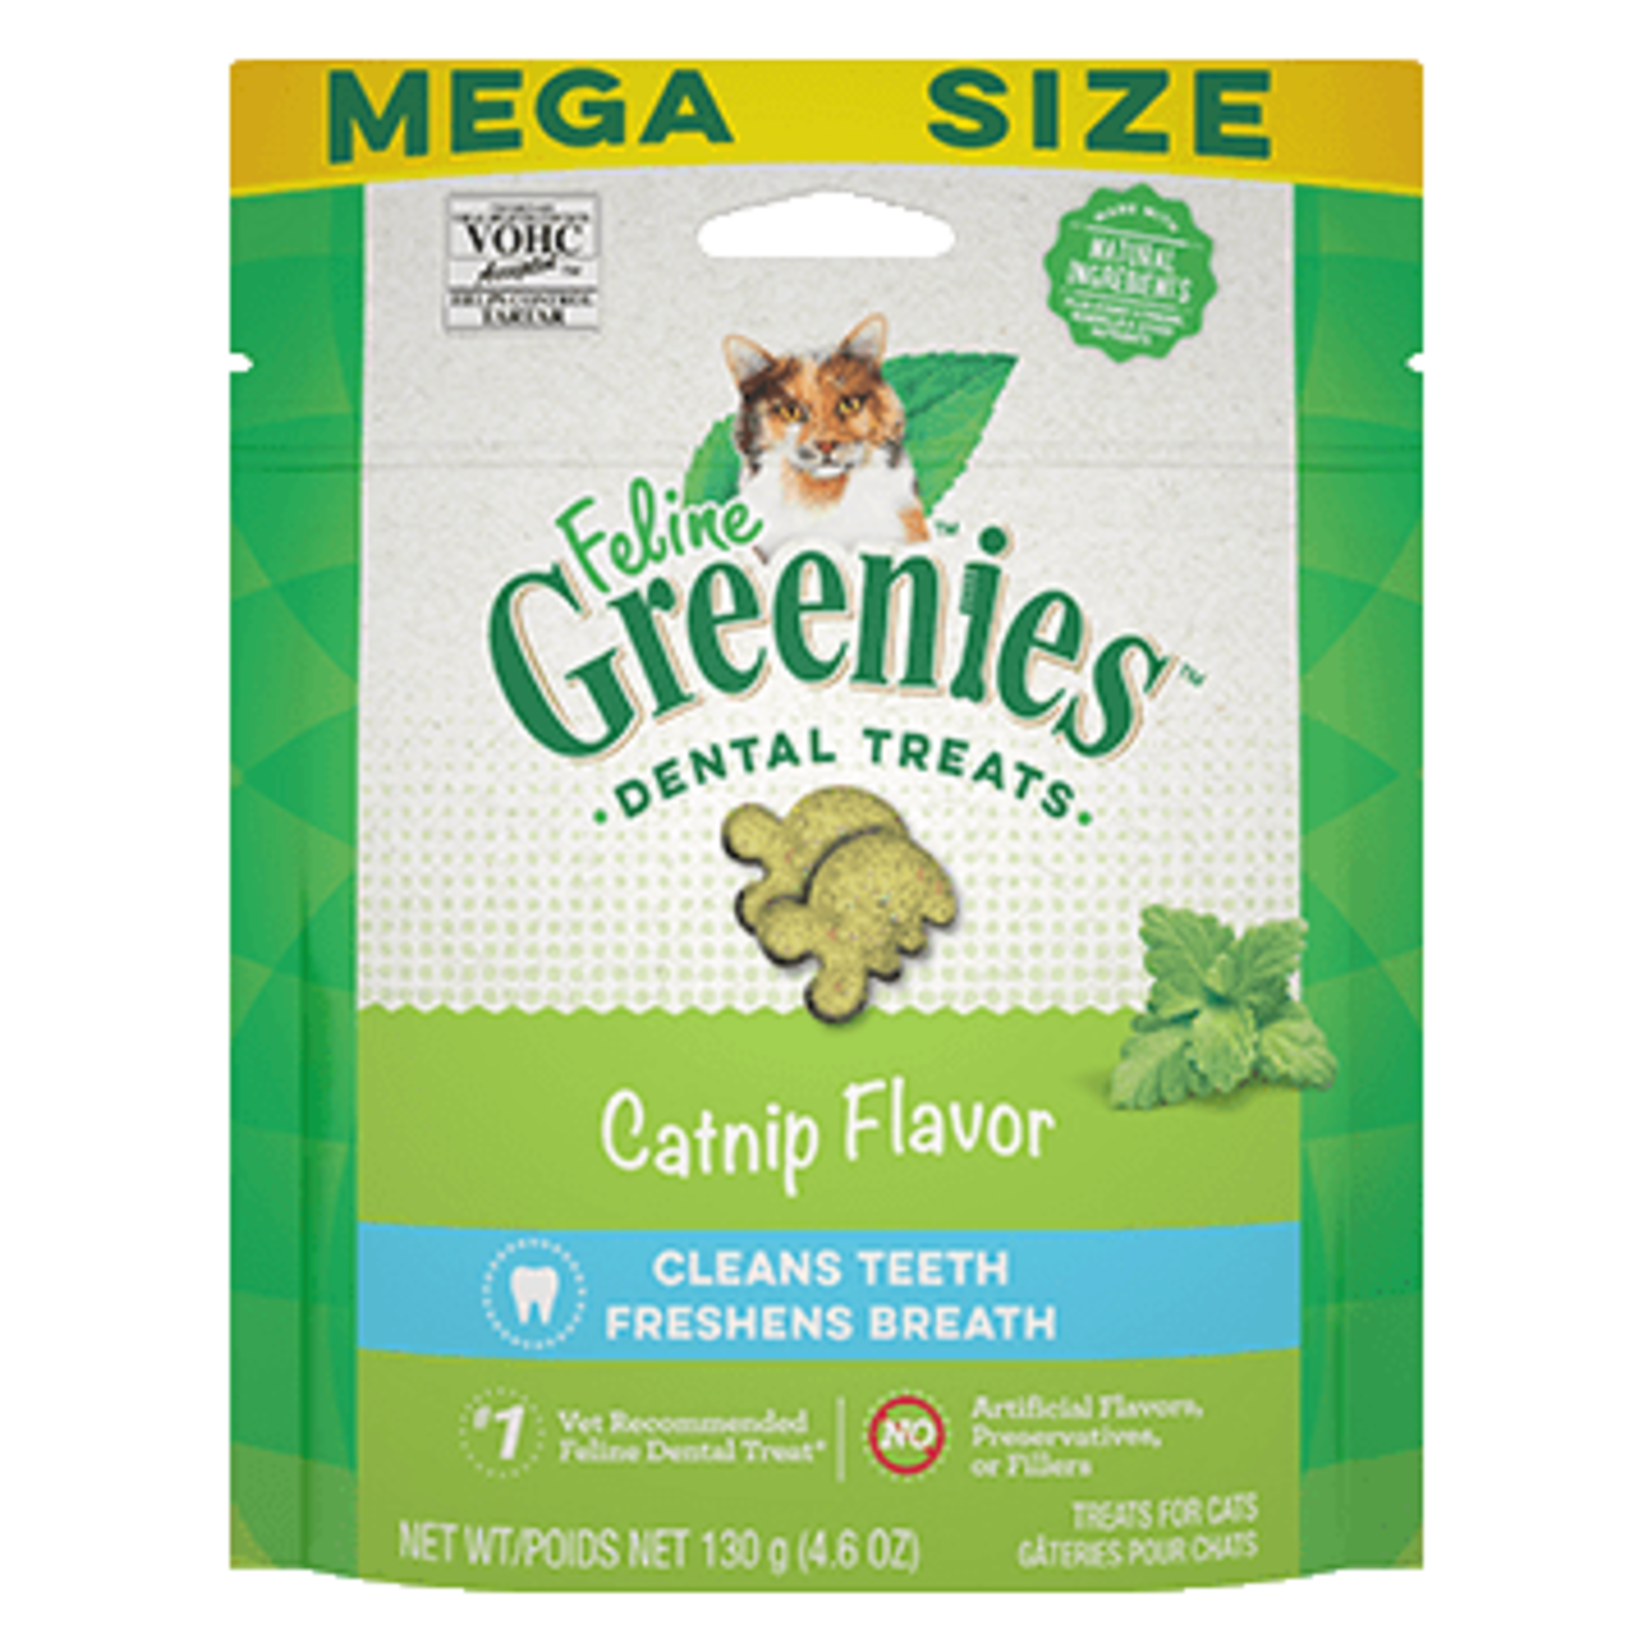 Greenies Feline Greenies Cat Dental Treats Catnip Flavor